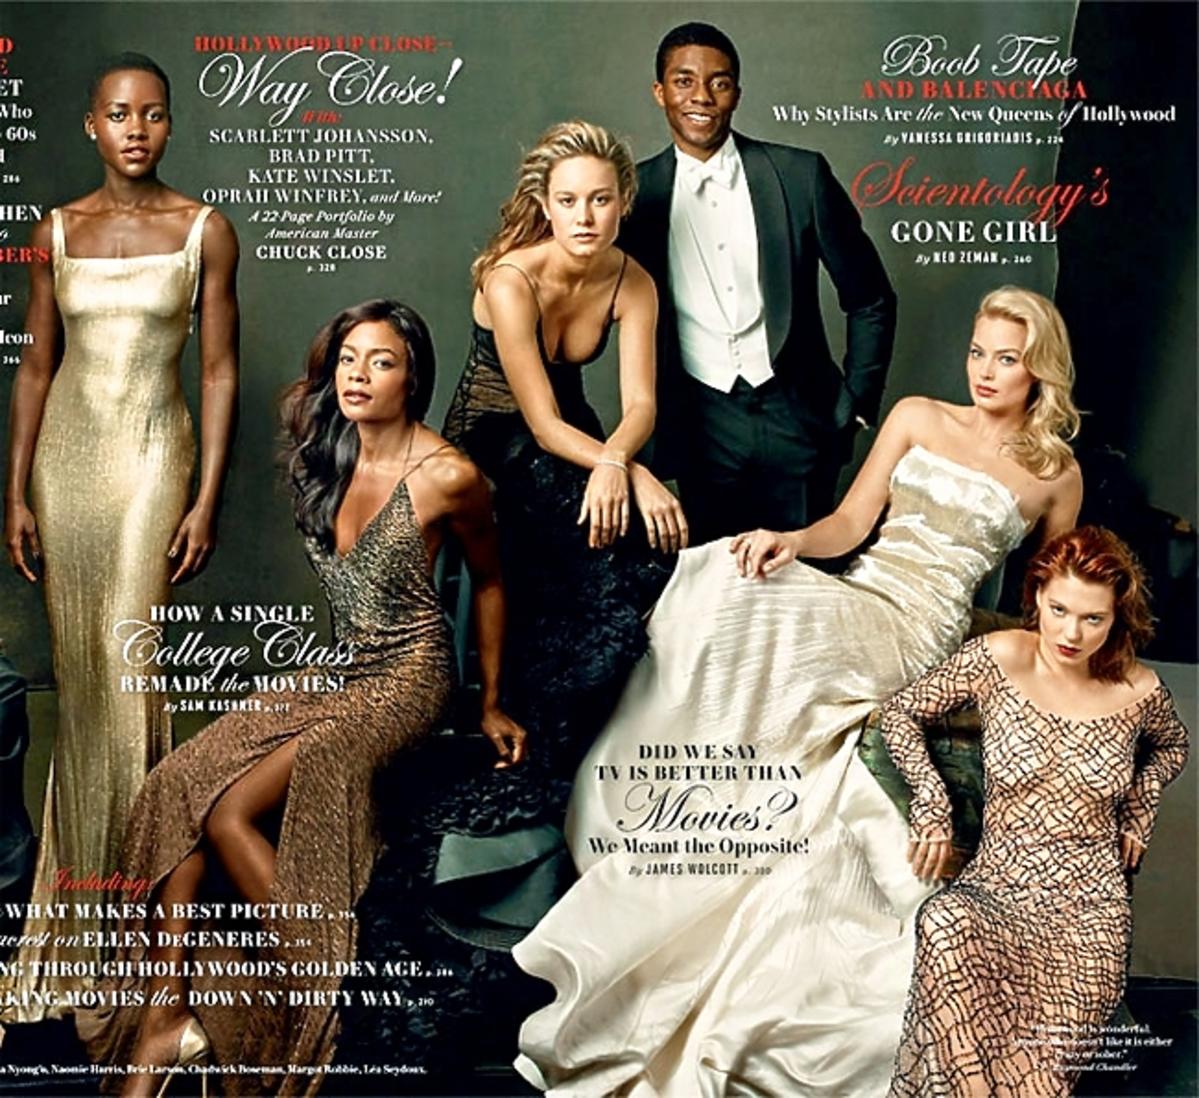 Vanity Fair Hollywood Issue 2014